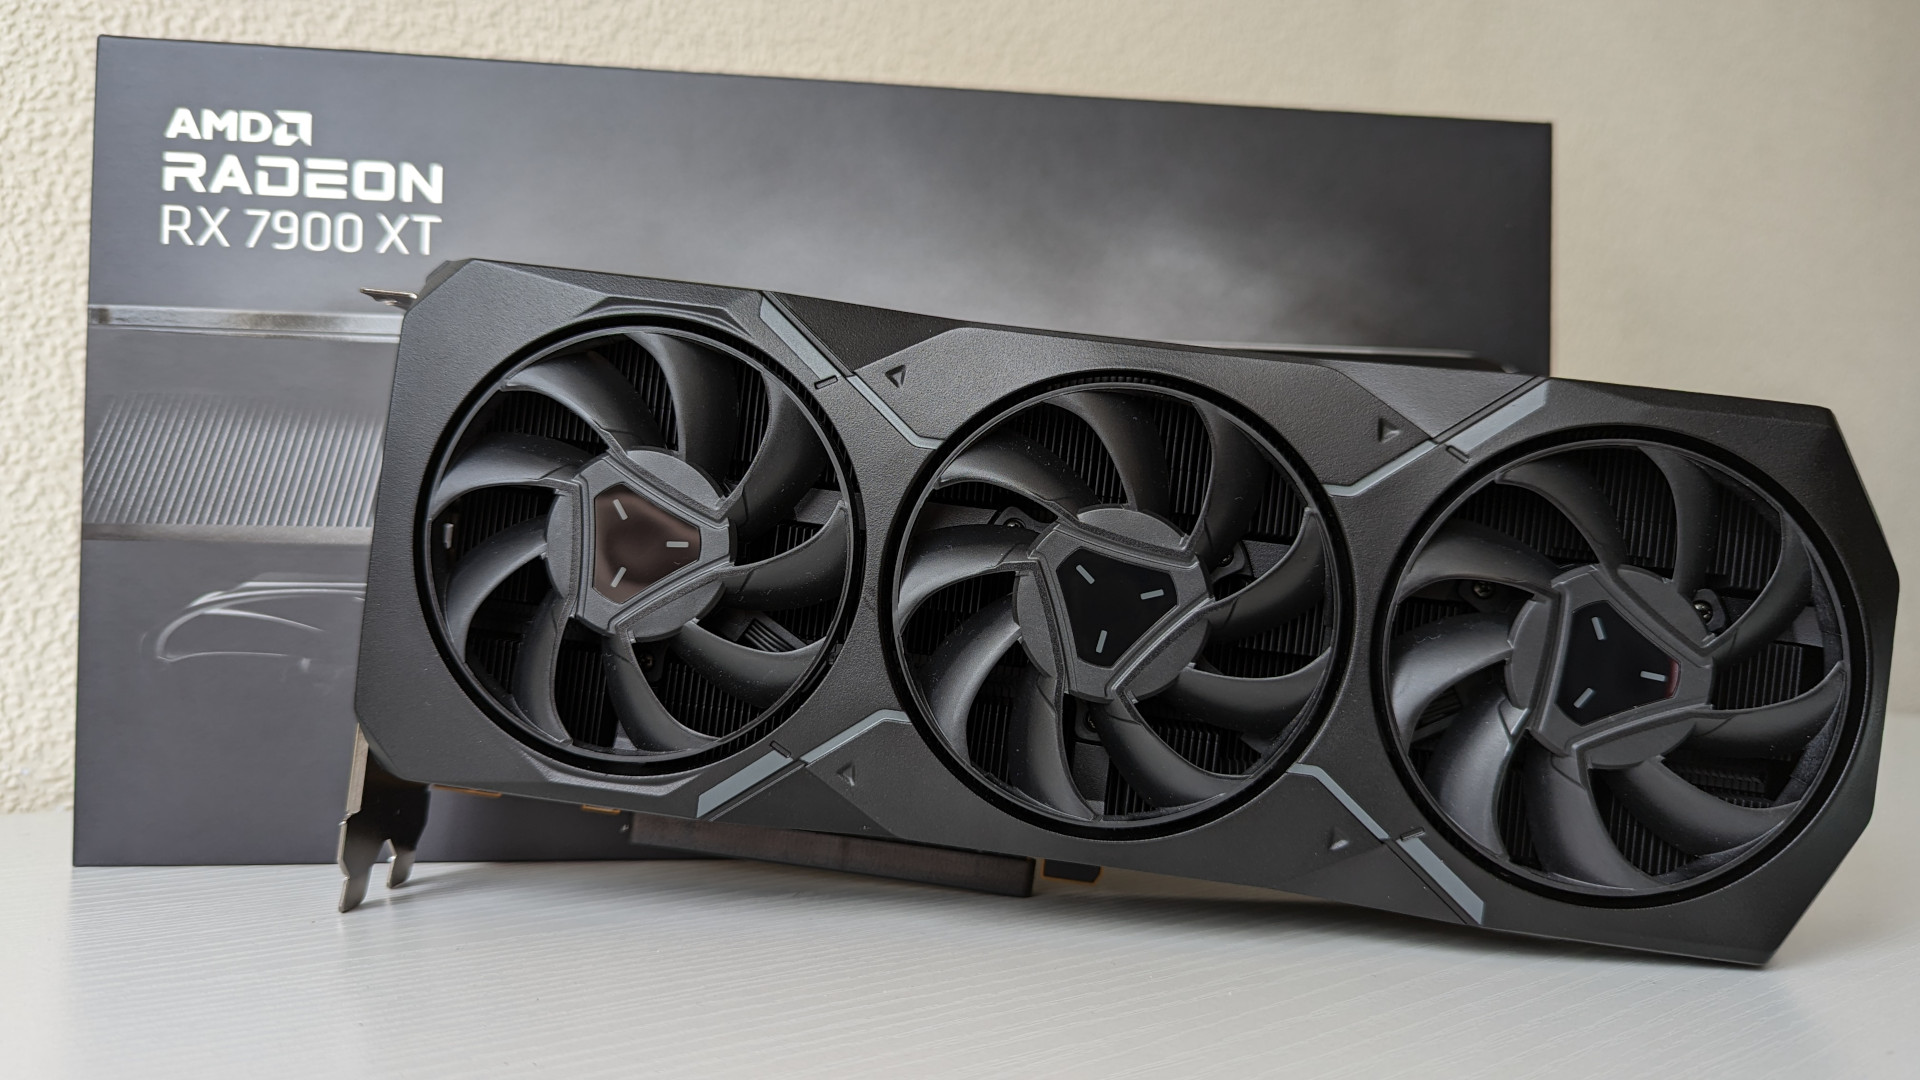 AMD Radeon RX 7900 XT review: a good GPU with an awkward price